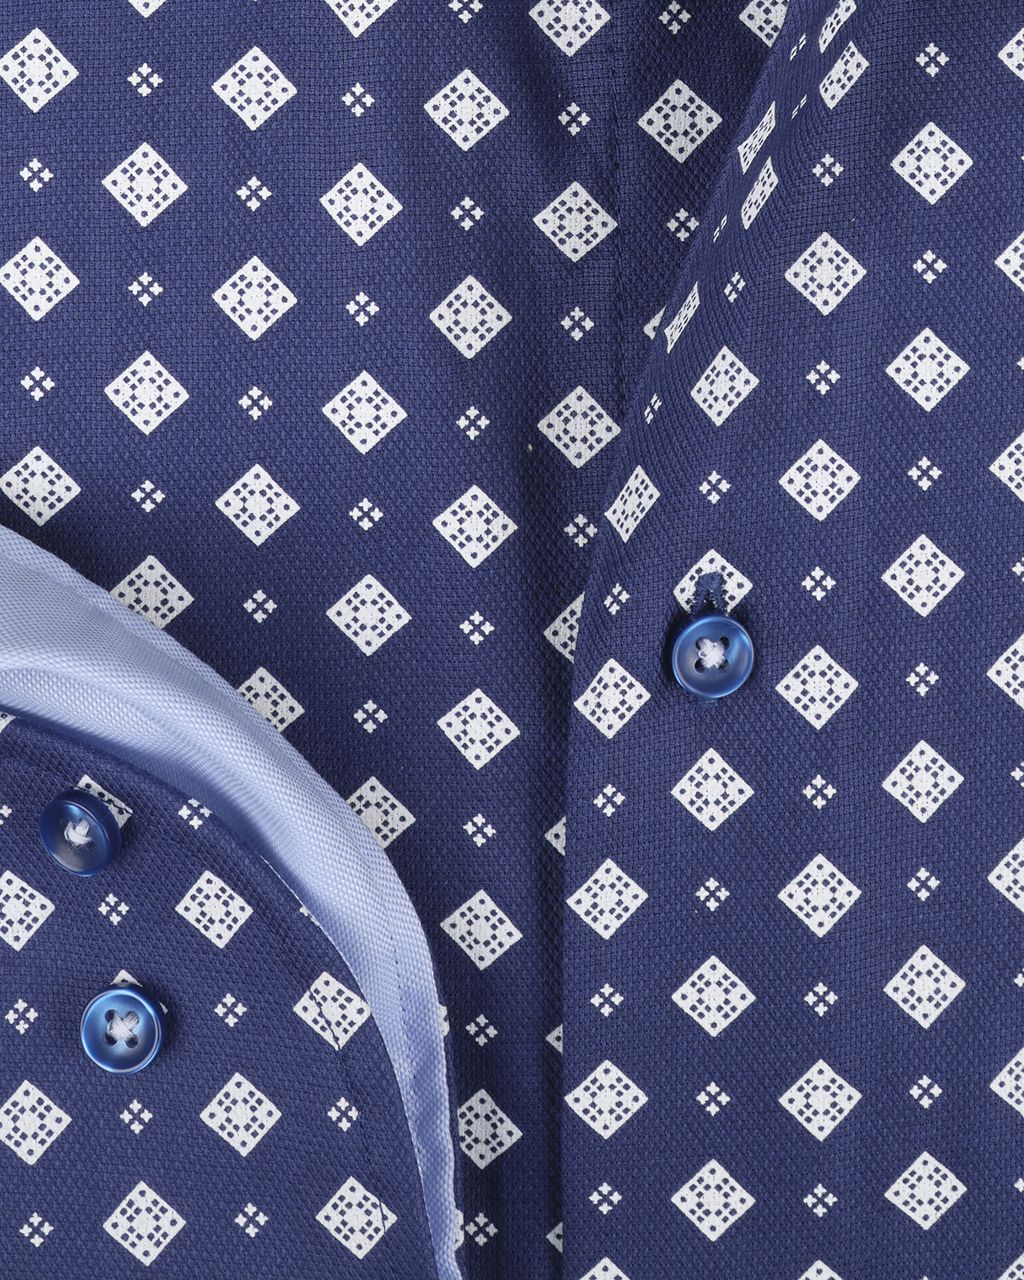 The BLUEPRINT Premium Trendy Overhemd LM Donkerblauw dessin 078404-001-L